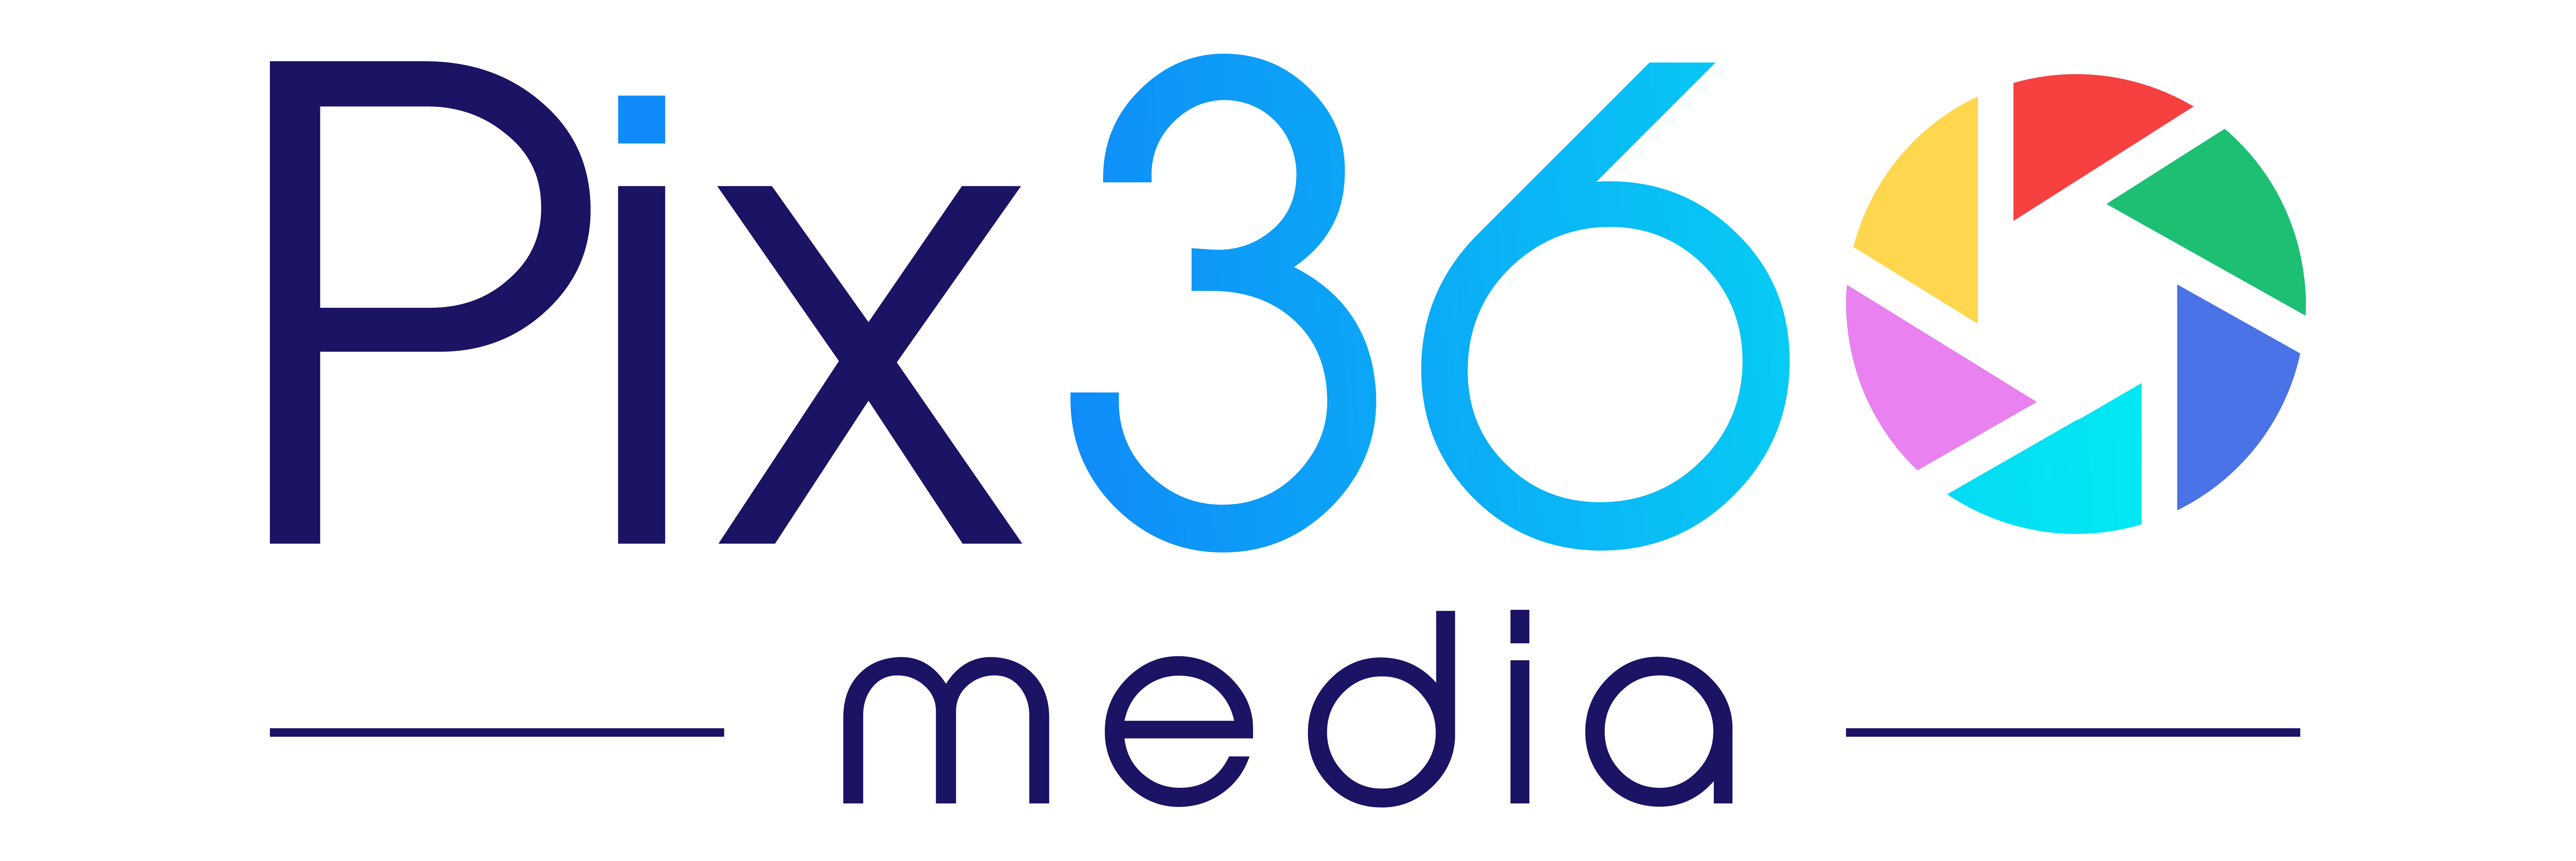 Pix360 Media